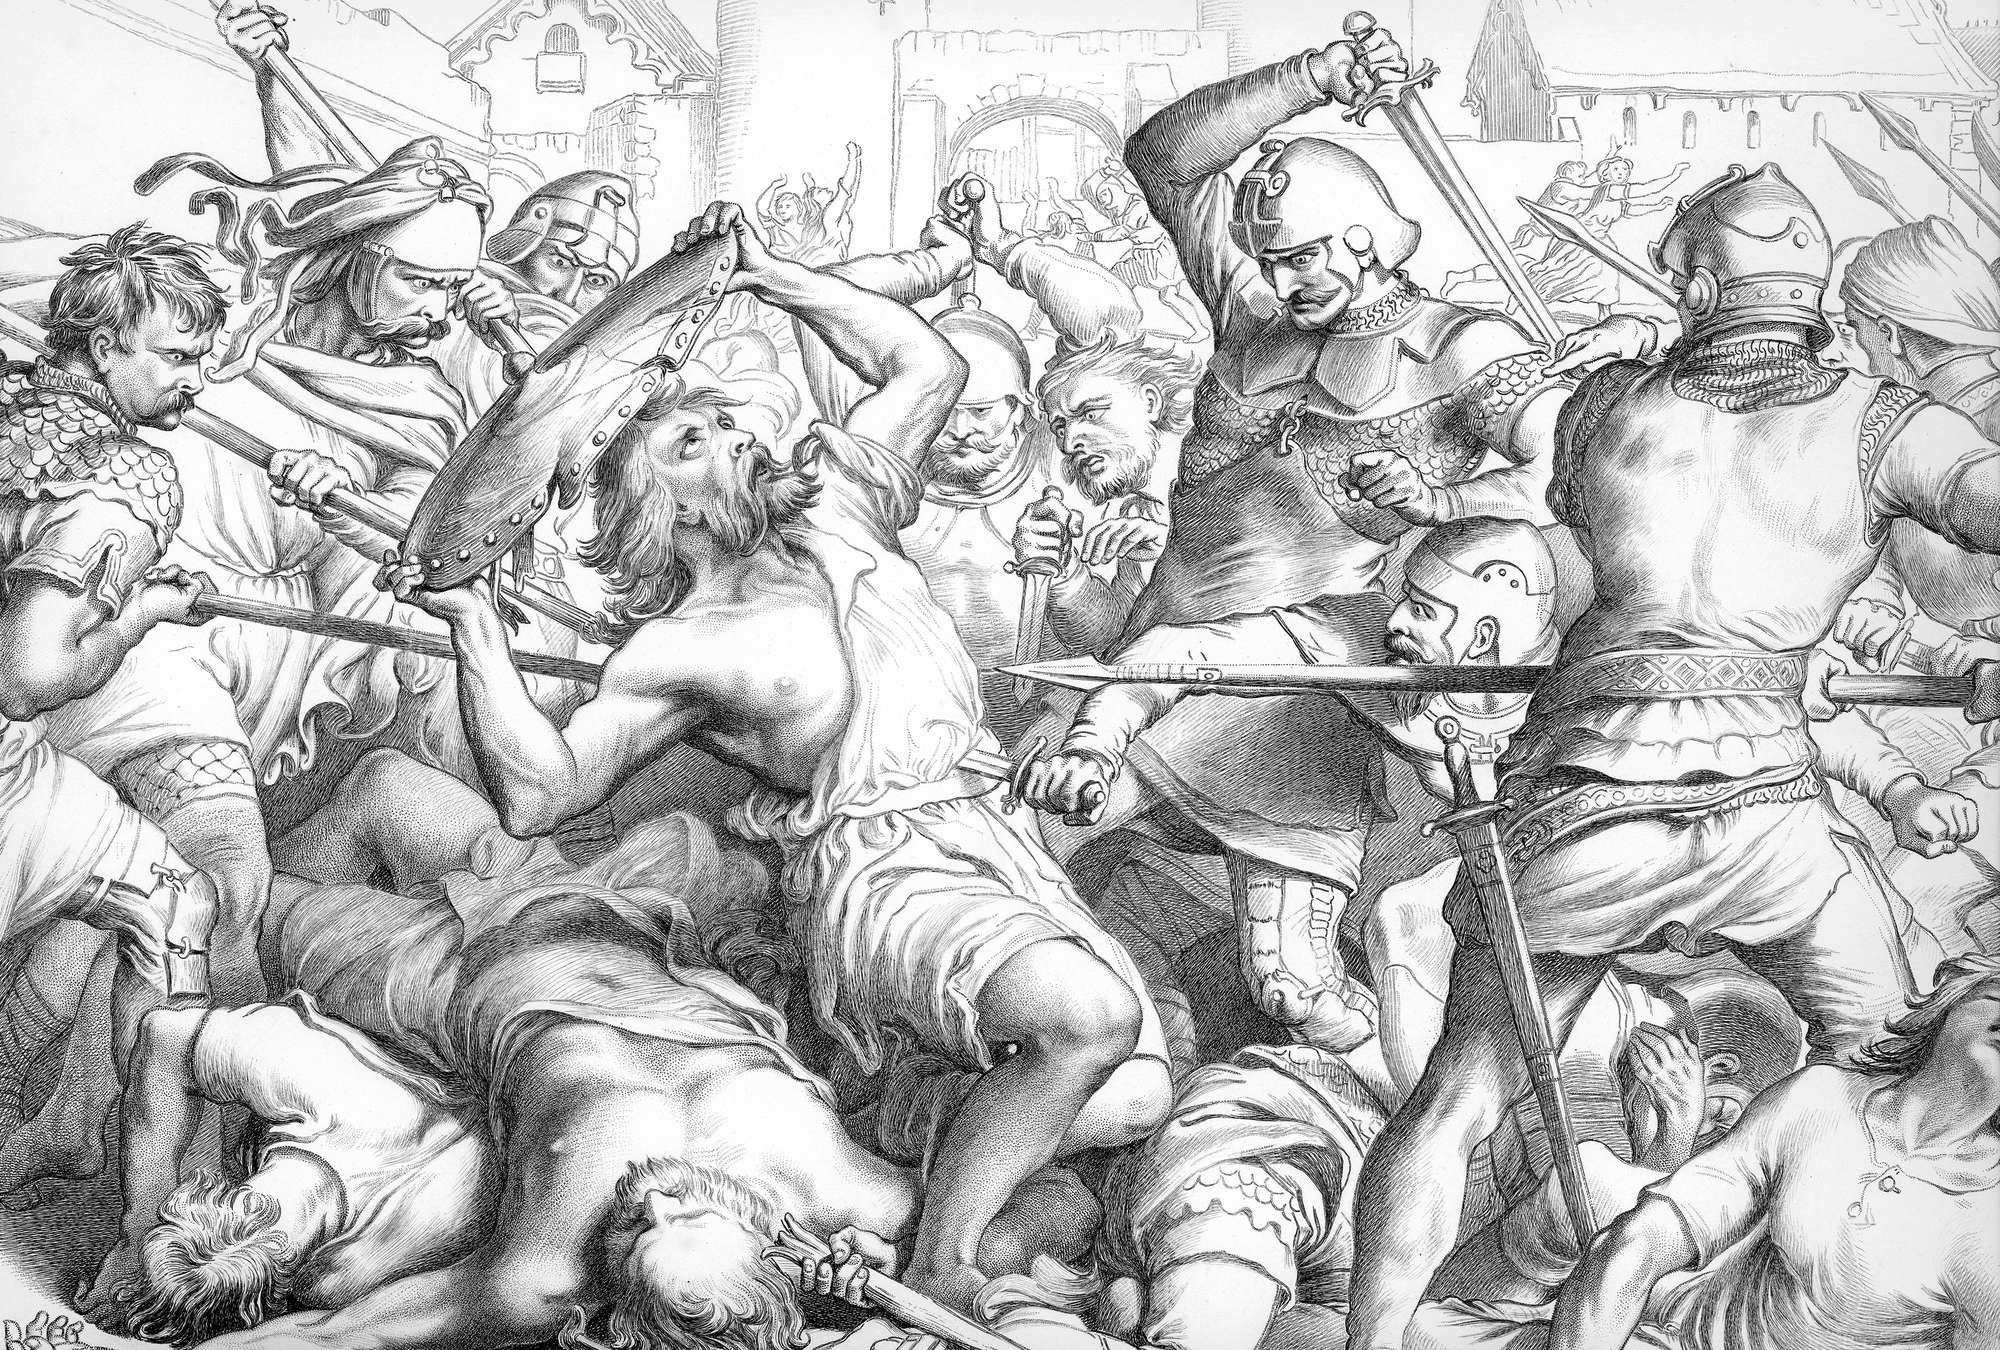             Photo wallpaper artwork pencil drawing "The Last Fight Of Hereward the Wake»
        